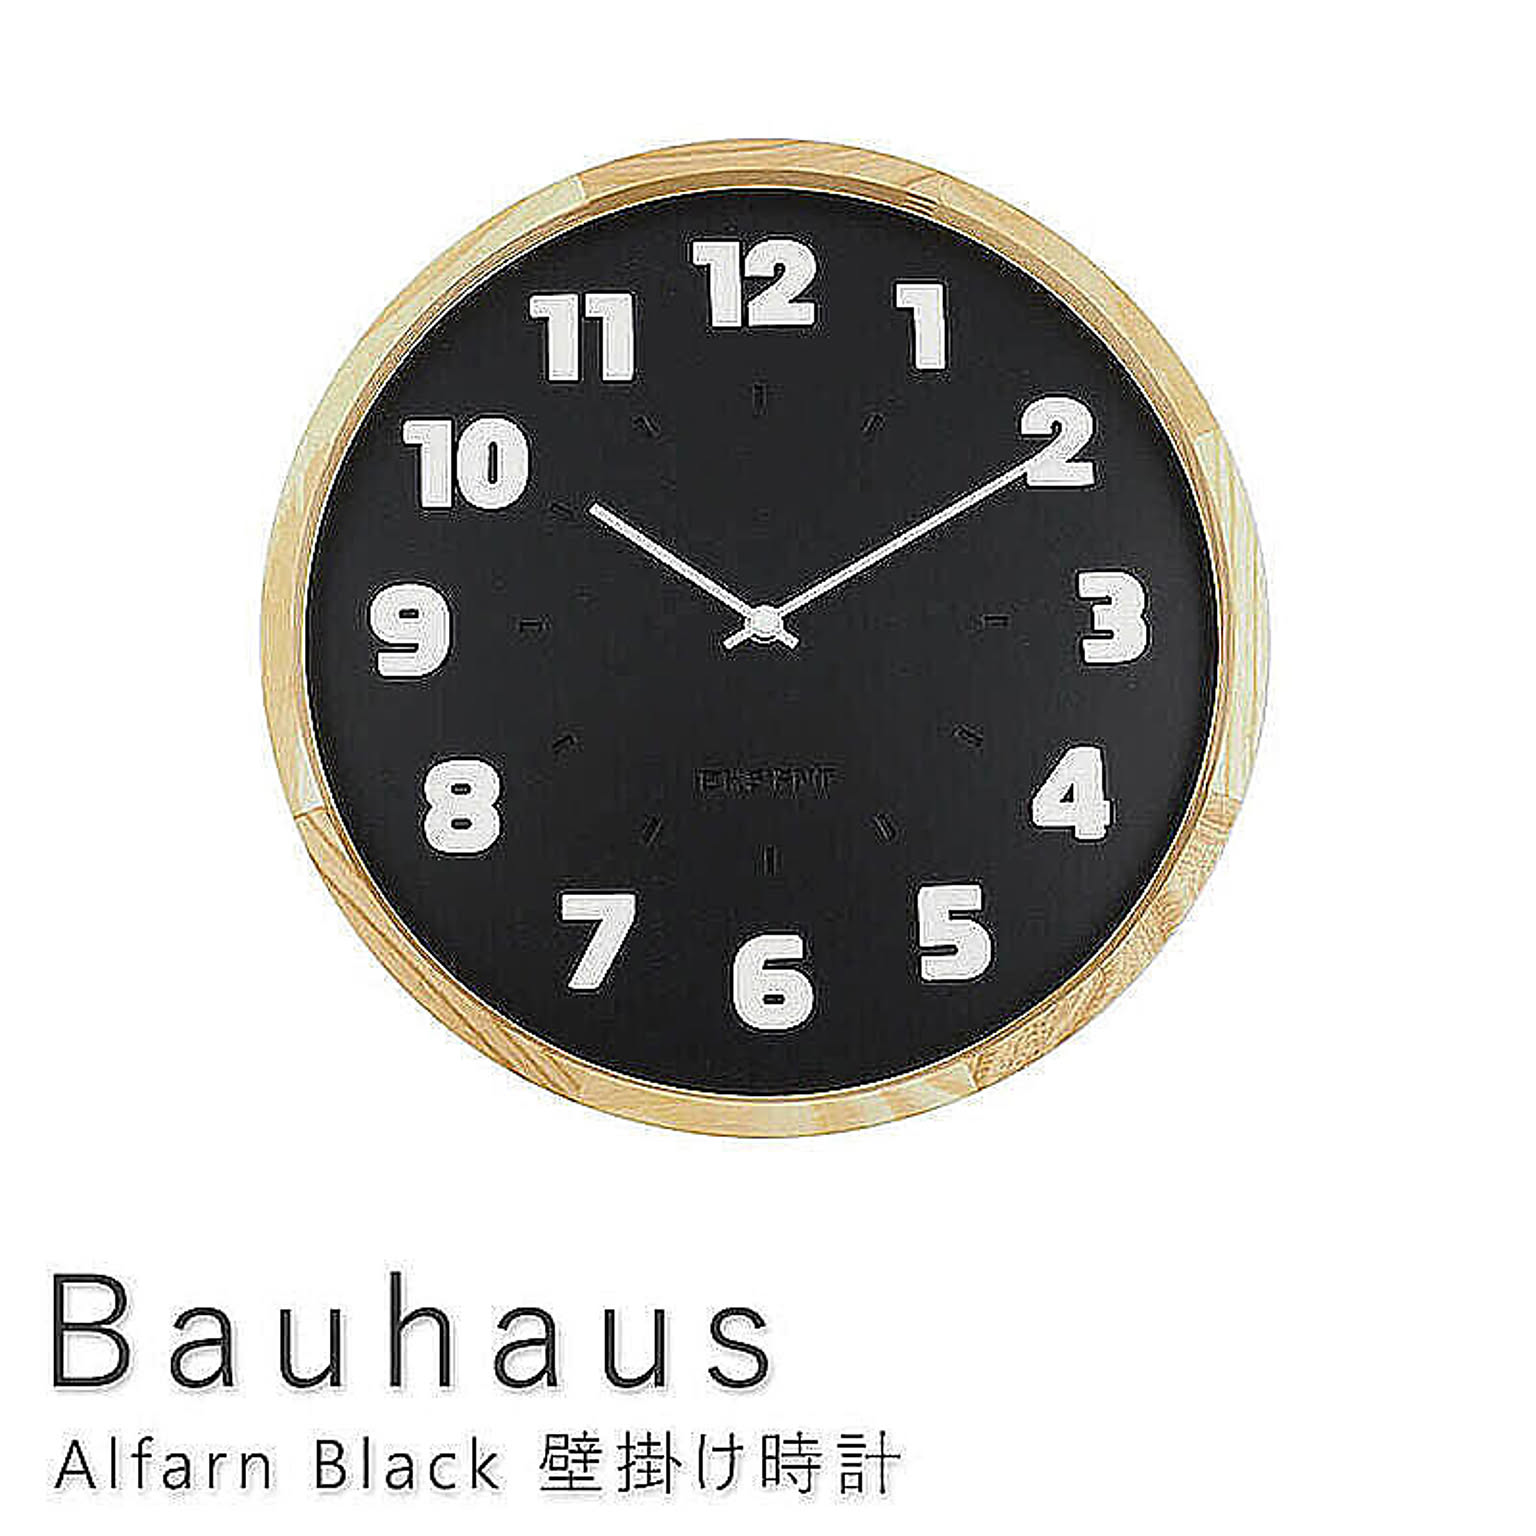 Bauhaus（バウハウス） Alfarn Black 壁掛け時計 m11684